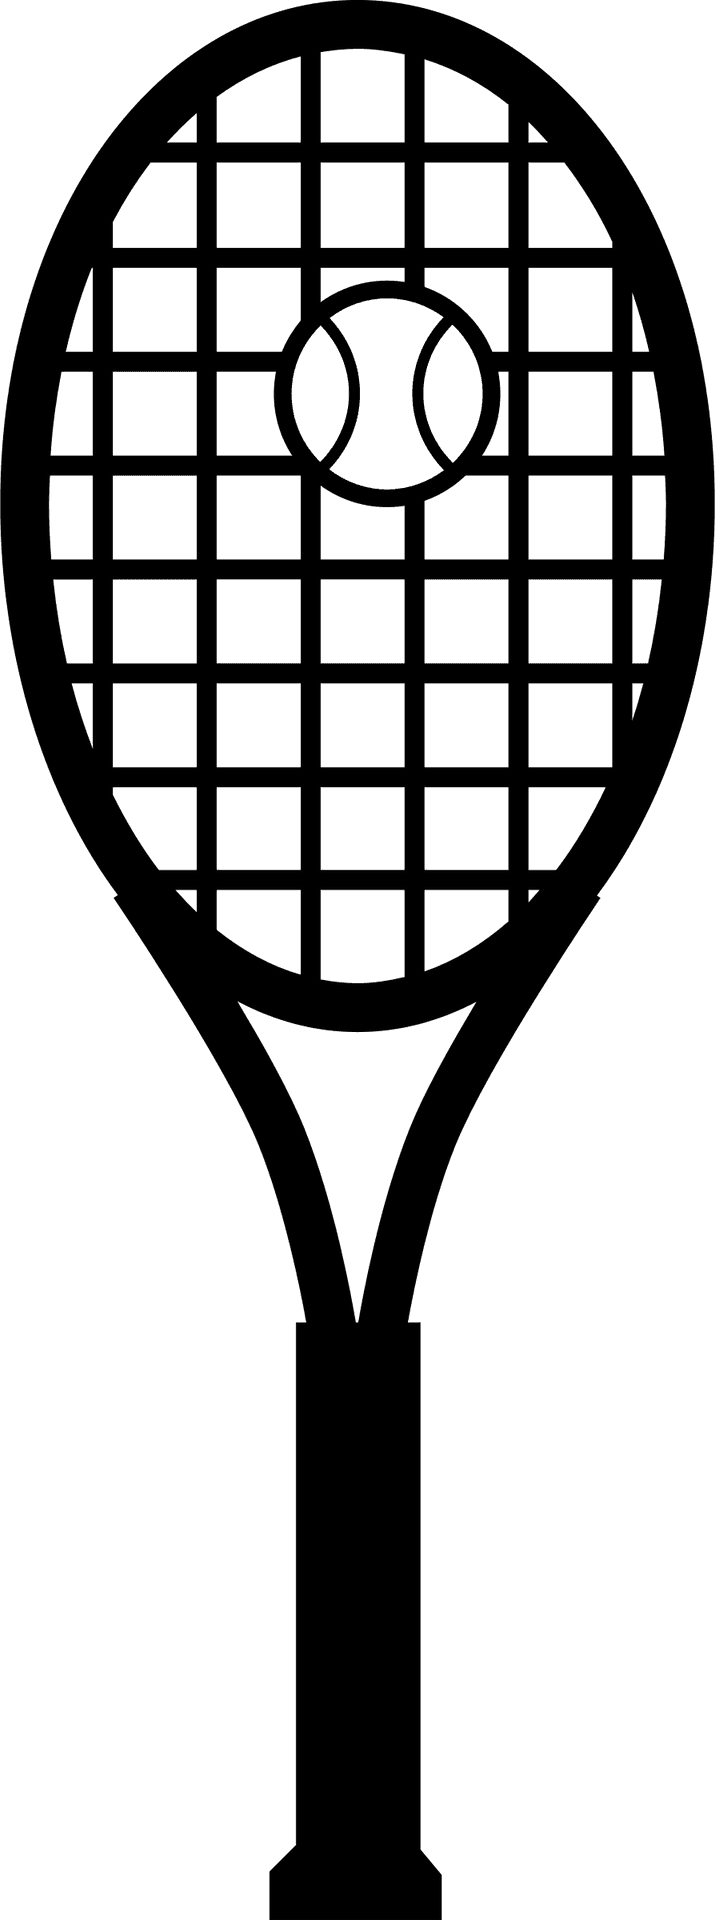 Tennis Racketand Ball Silhouette PNG